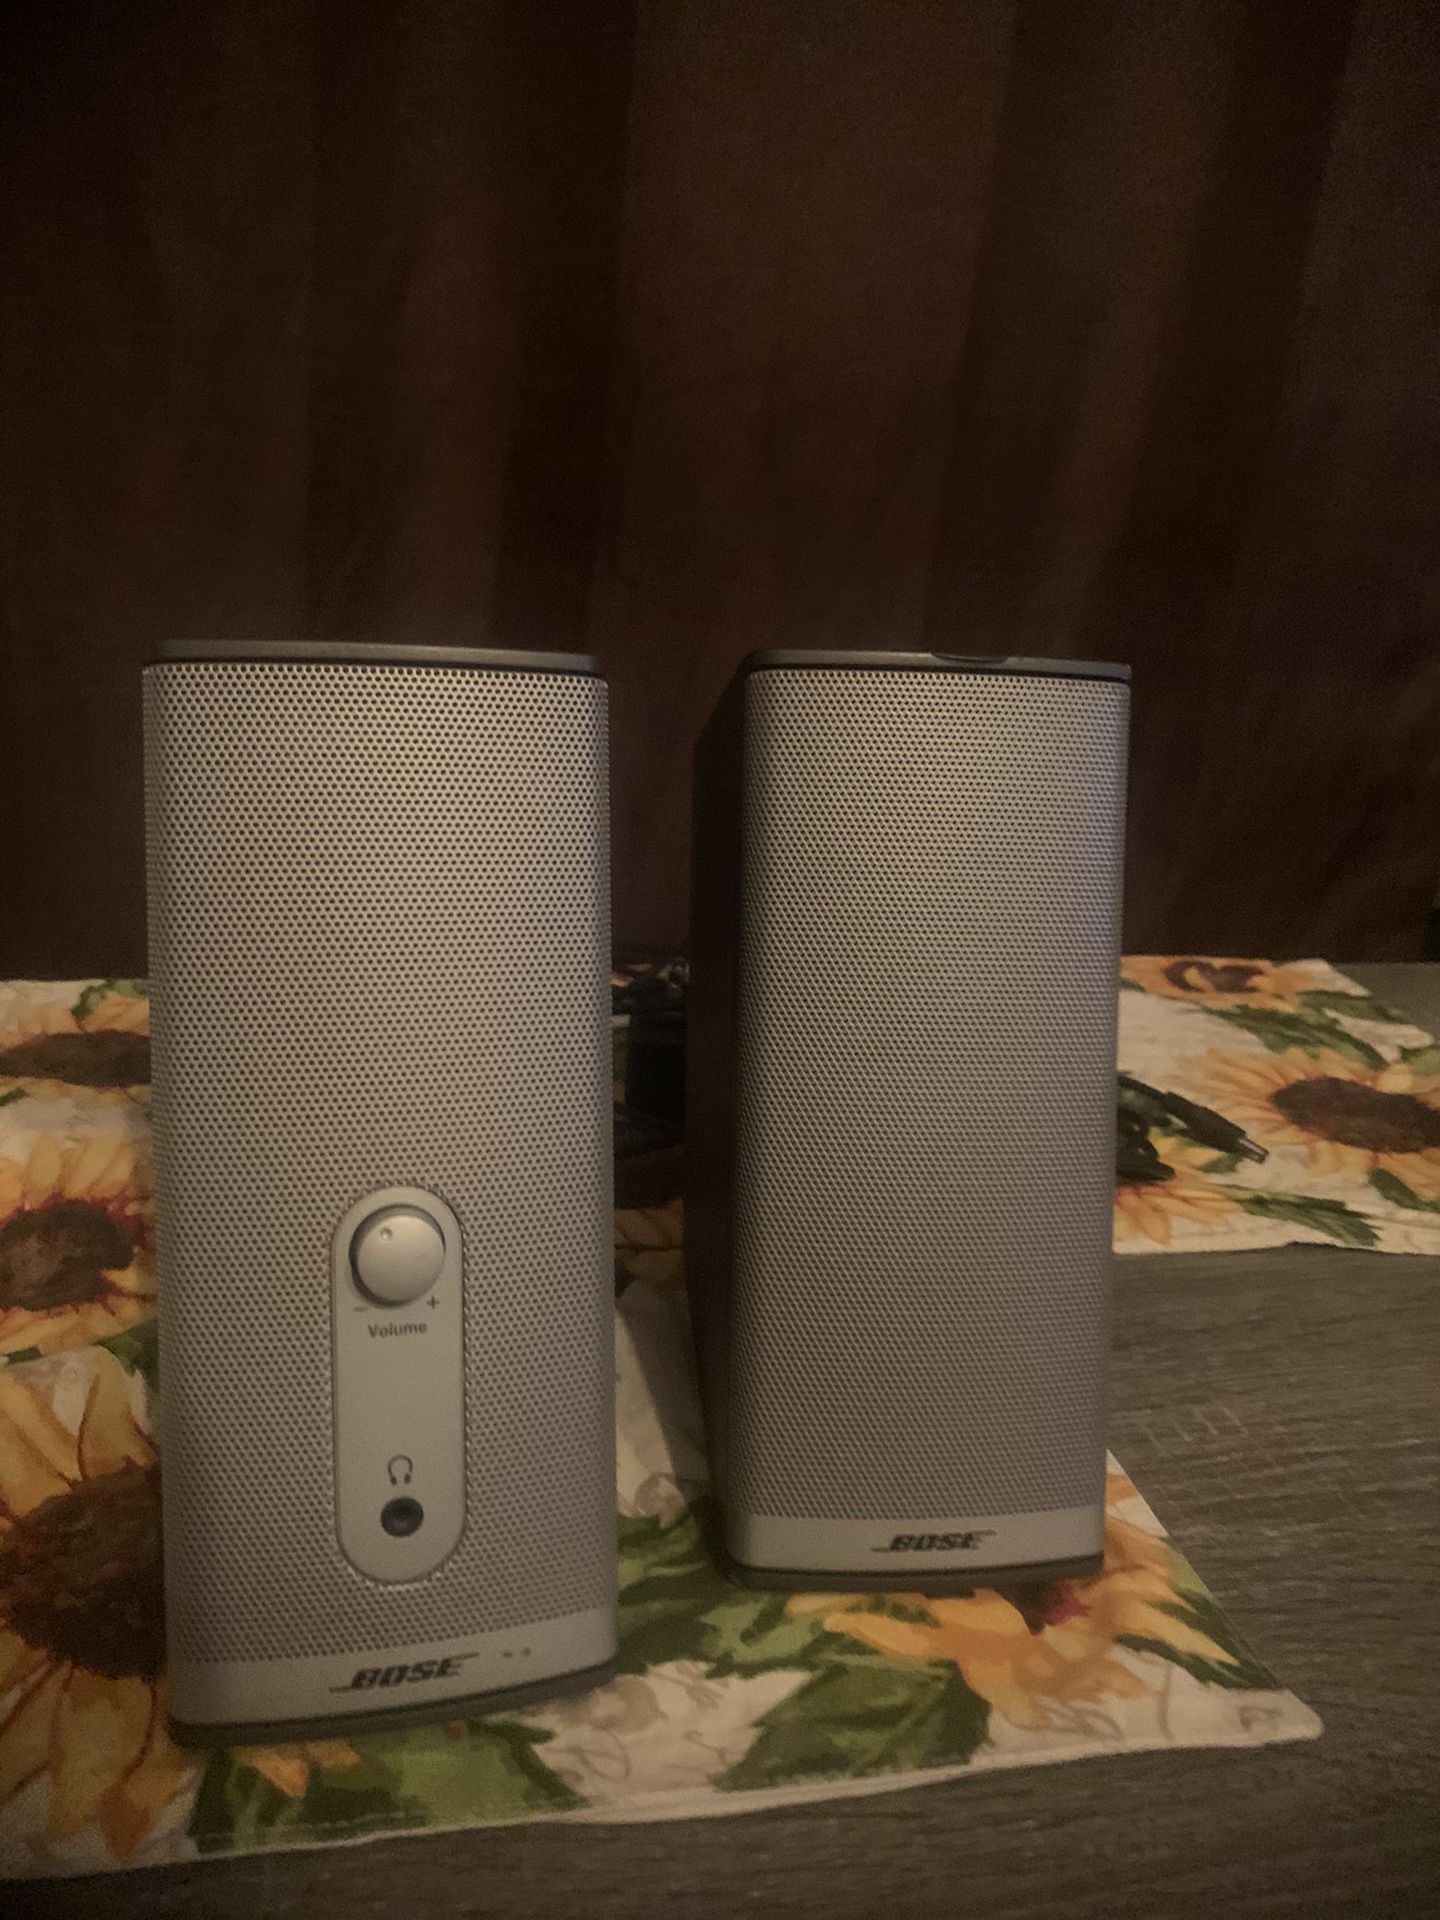 Bose companion 2 series 2 speakers